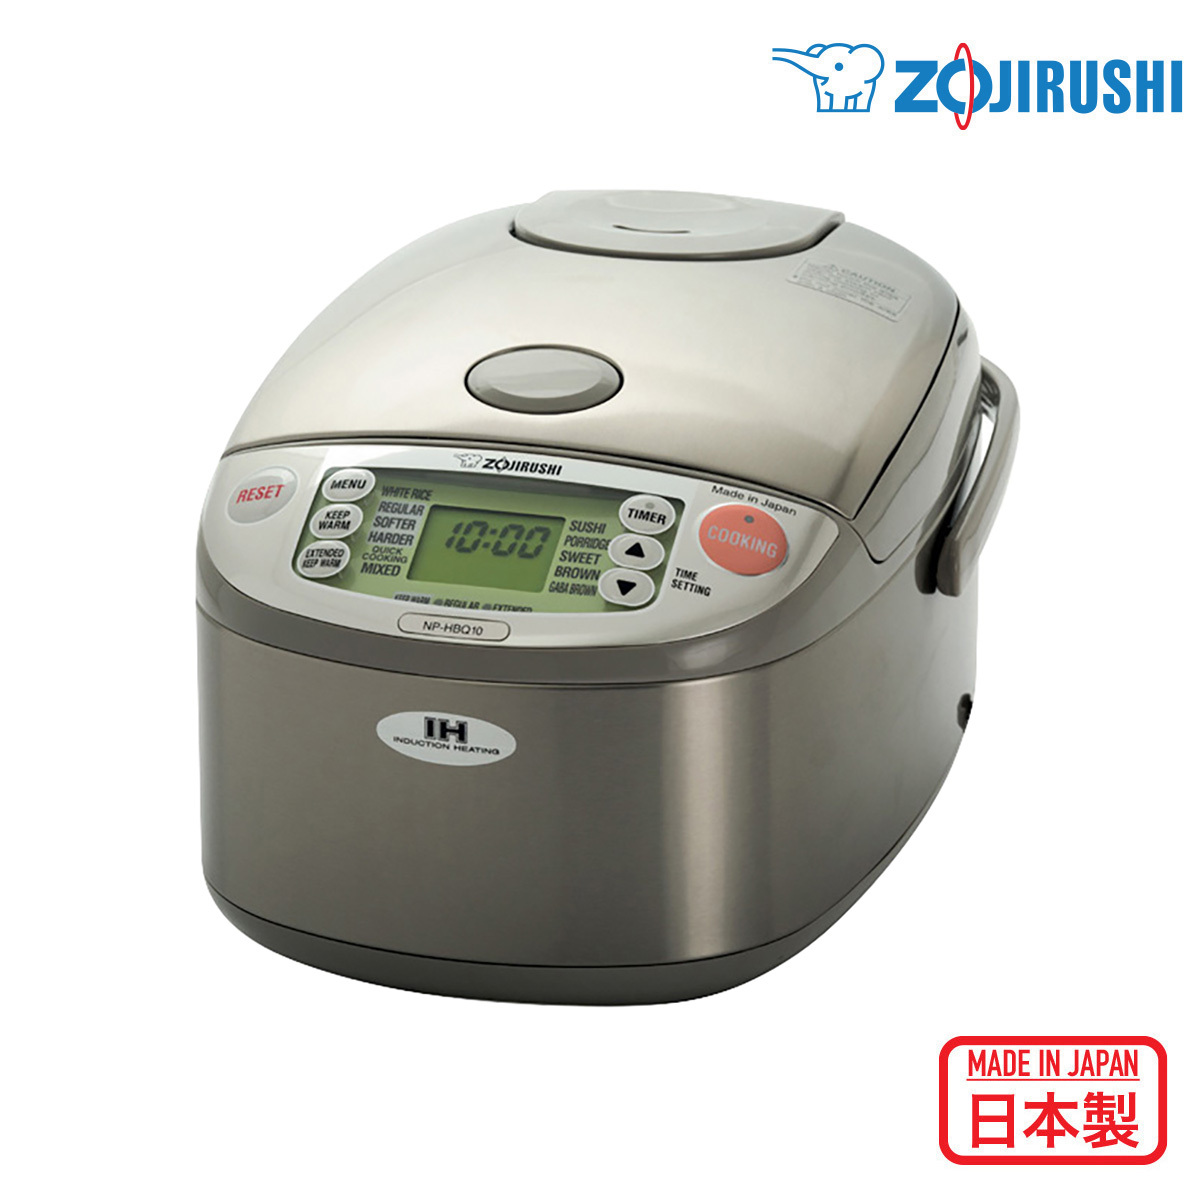 Zojirushi 220-230V Rice Cooker NP-HLH18 XA GABA Brown NP-HBC18